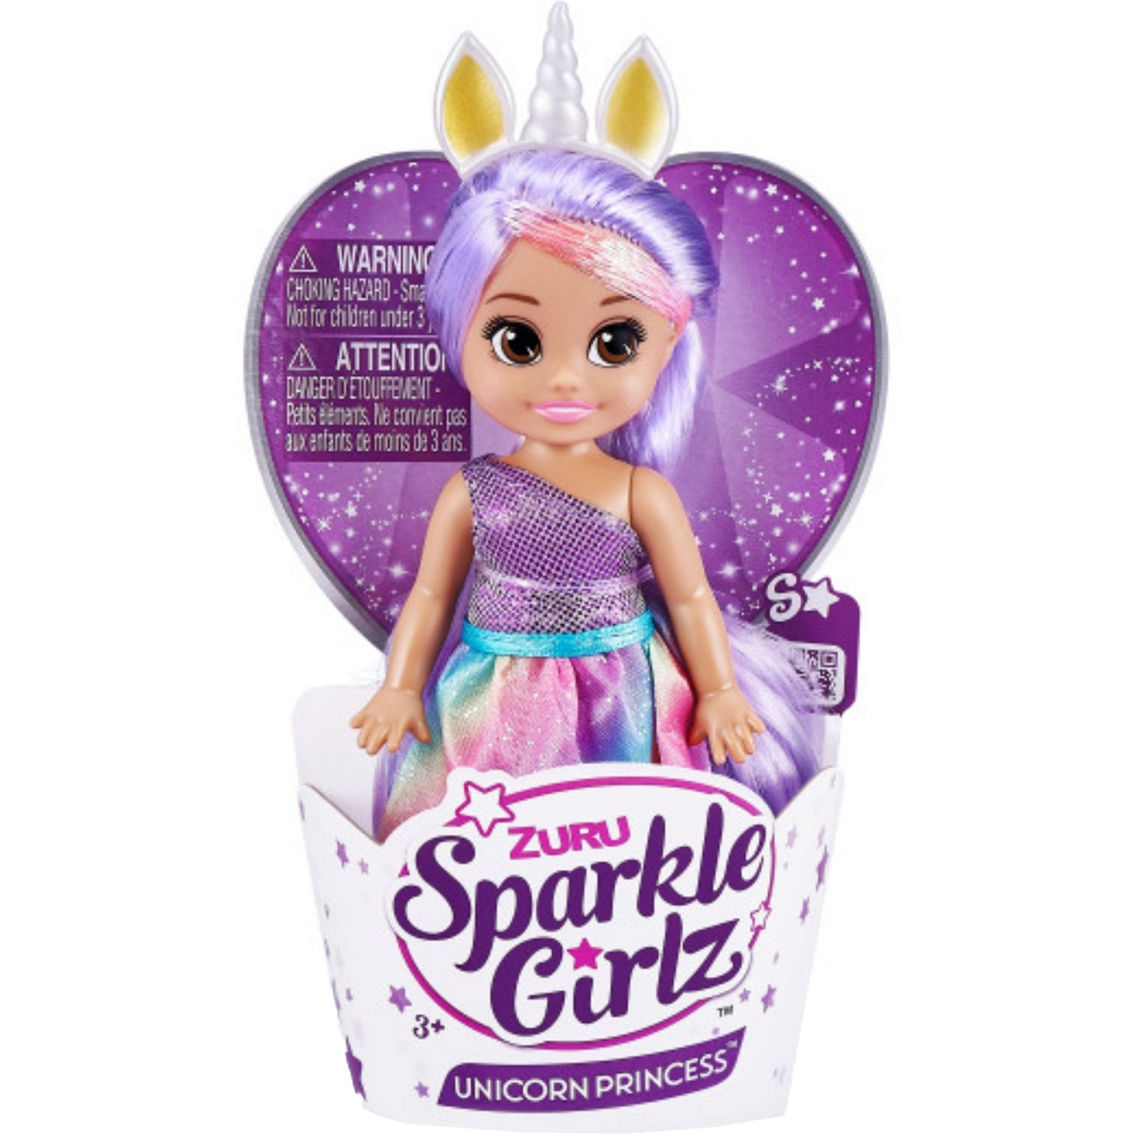 ZURU Sparkle Girlz Unicorn Princess Cupcake Doll - Image 2 of 2